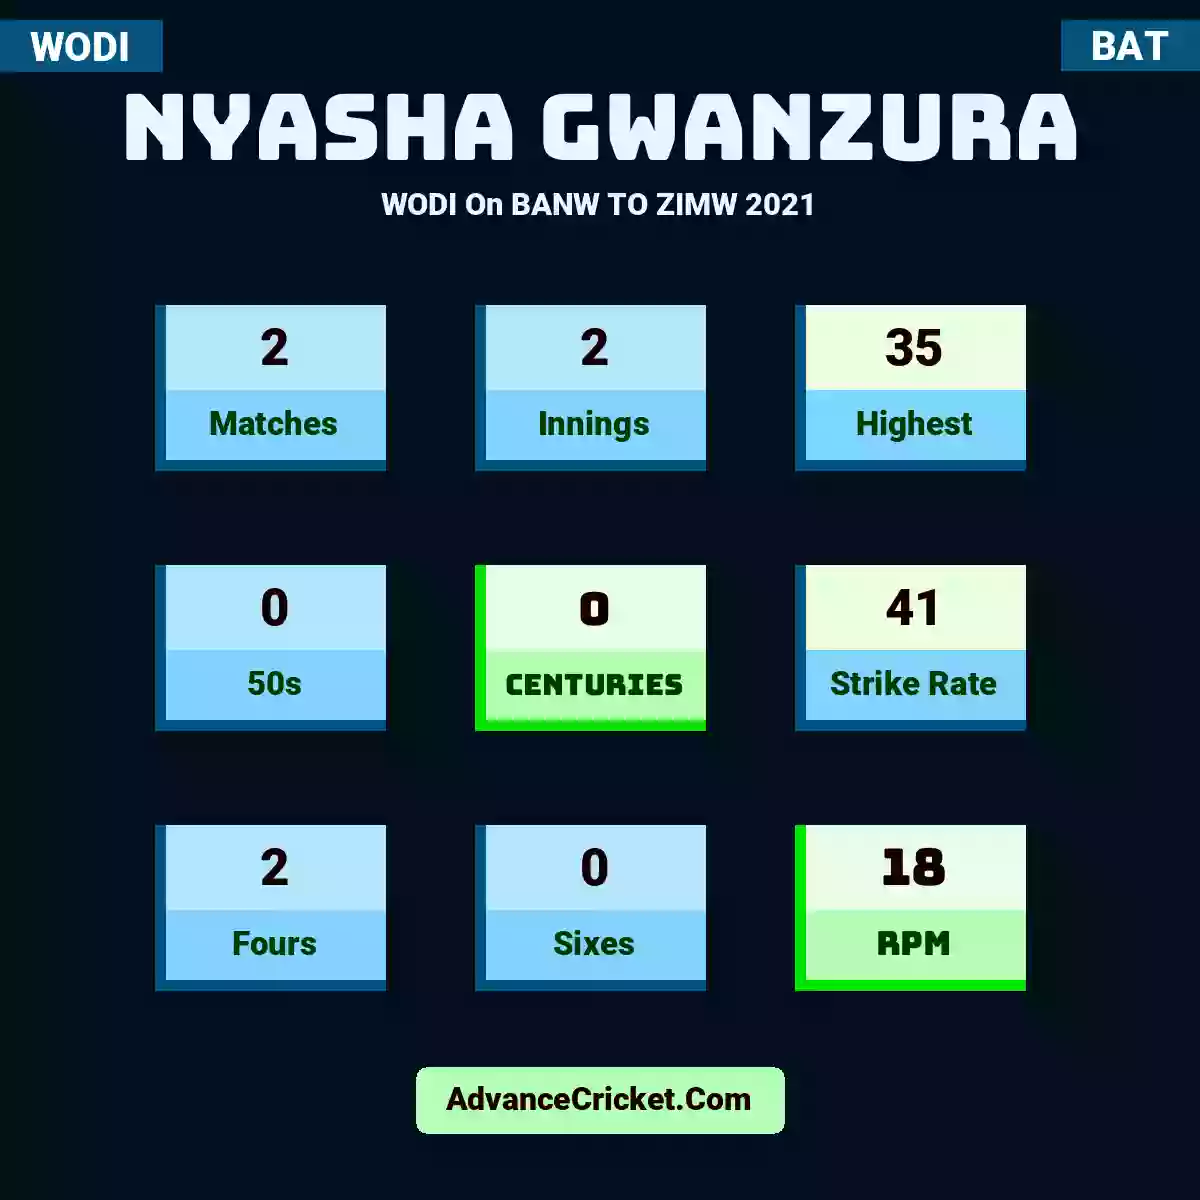 Nyasha Gwanzura WODI  On BANW TO ZIMW 2021, Nyasha Gwanzura played 2 matches, scored 35 runs as highest, 0 half-centuries, and 0 centuries, with a strike rate of 41. N.Gwanzura hit 2 fours and 0 sixes, with an RPM of 18.